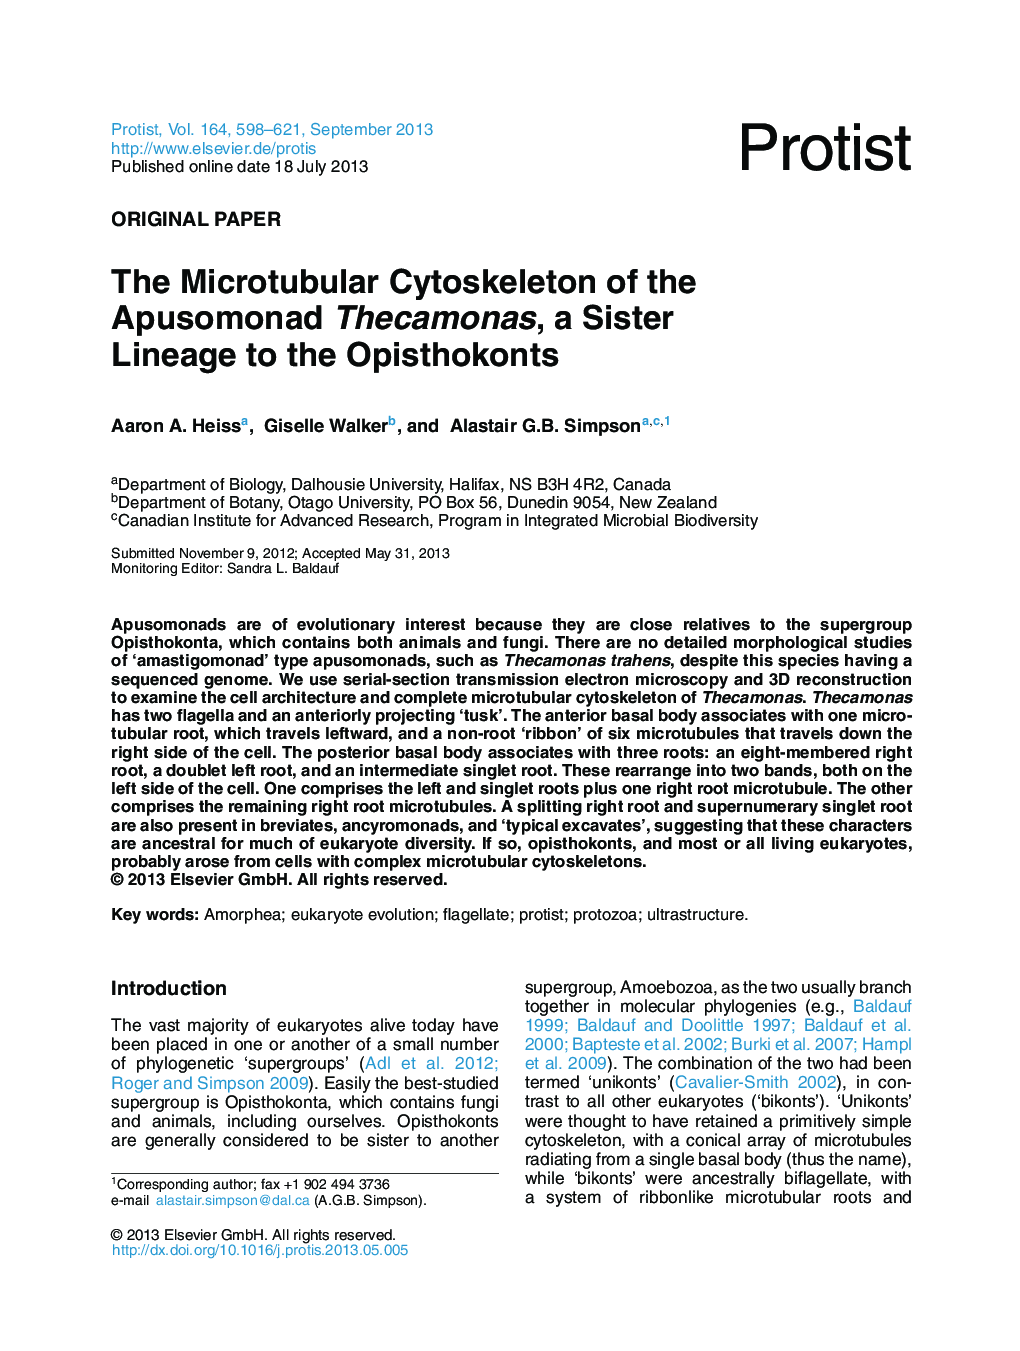 The Microtubular Cytoskeleton of the Apusomonad Thecamonas, a Sister Lineage to the Opisthokonts